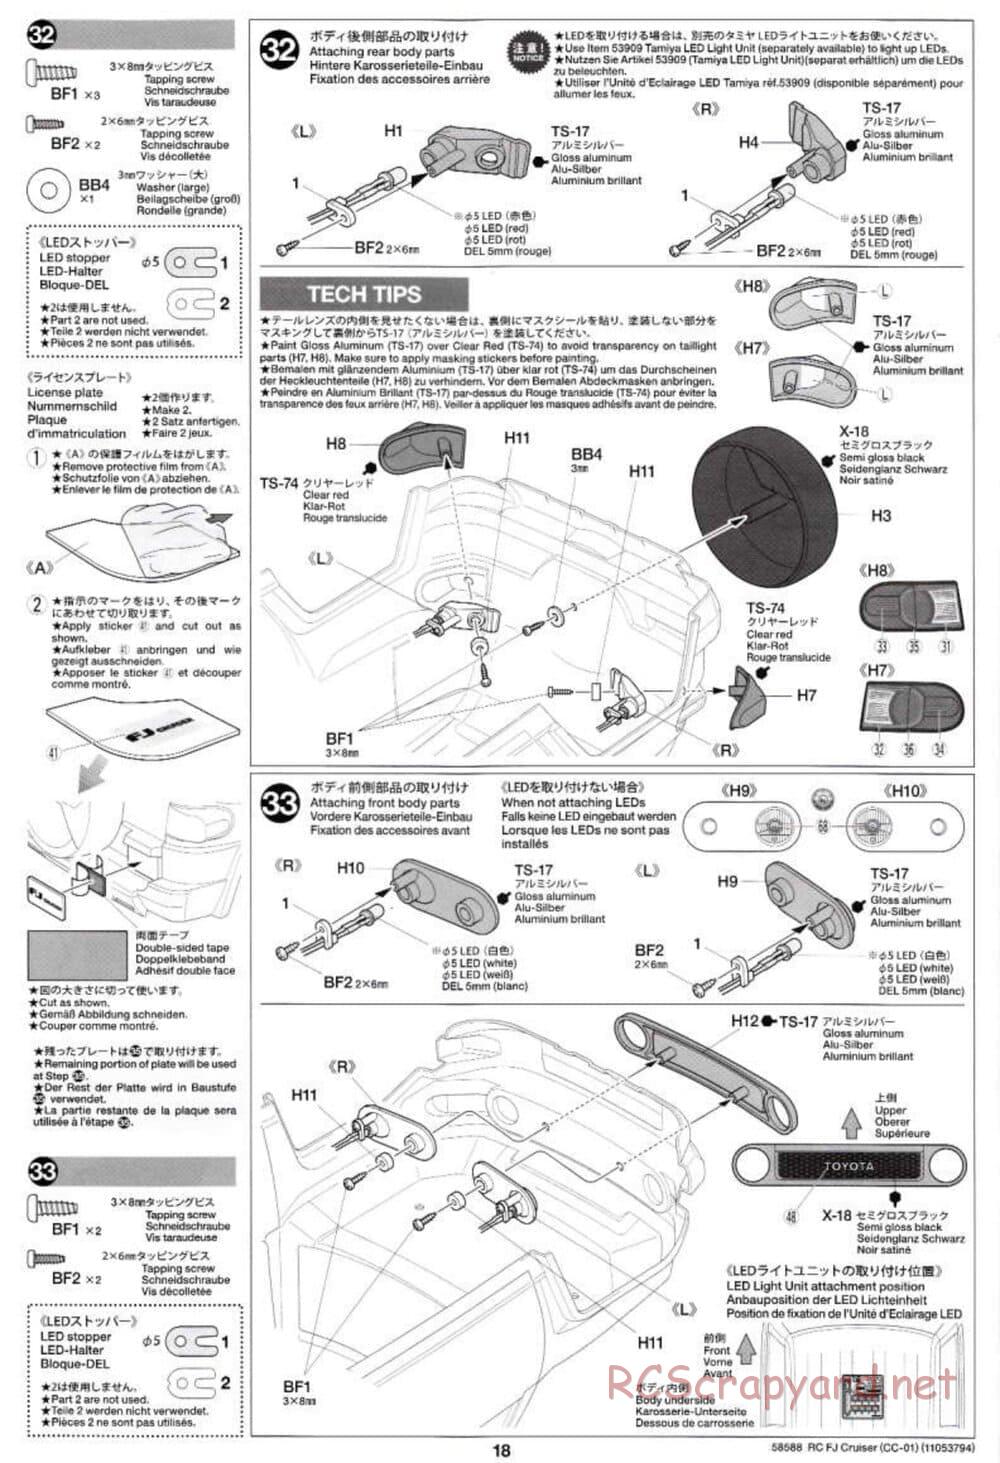 Tamiya - Toyota FJ Cruiser - CC-01 Chassis - Manual - Page 18